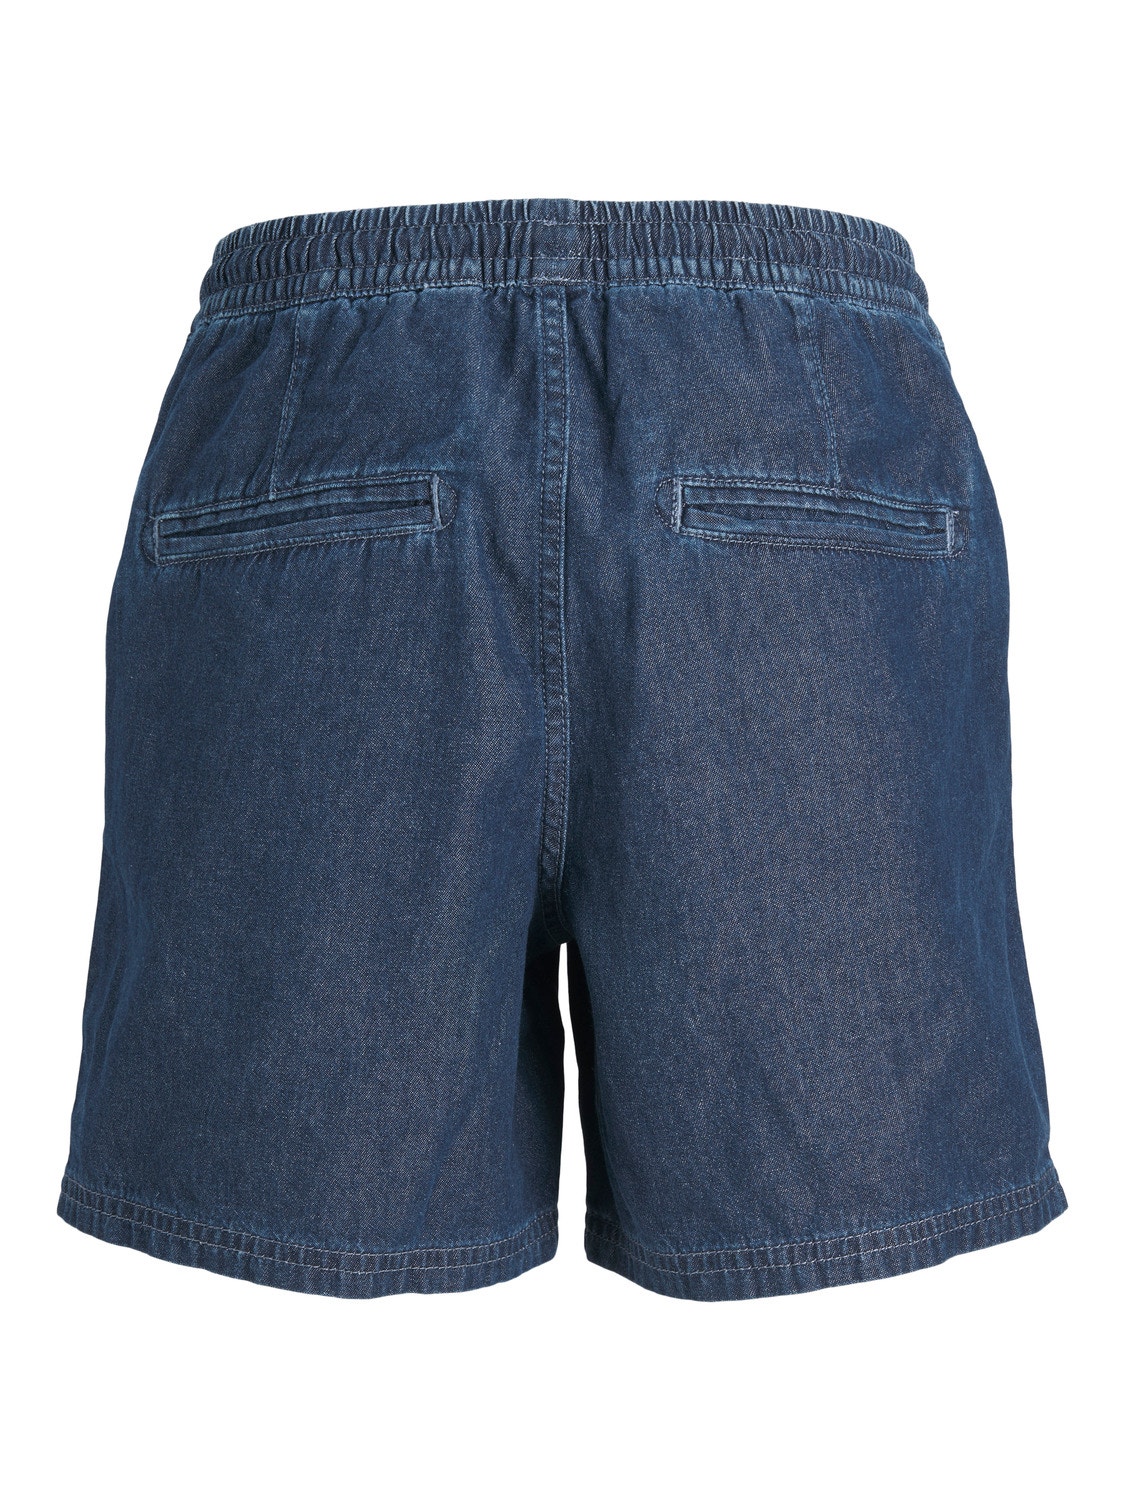 Jack & Jones Regular Fit Jeans Shorts Für jungs -Blue Denim - 12210579